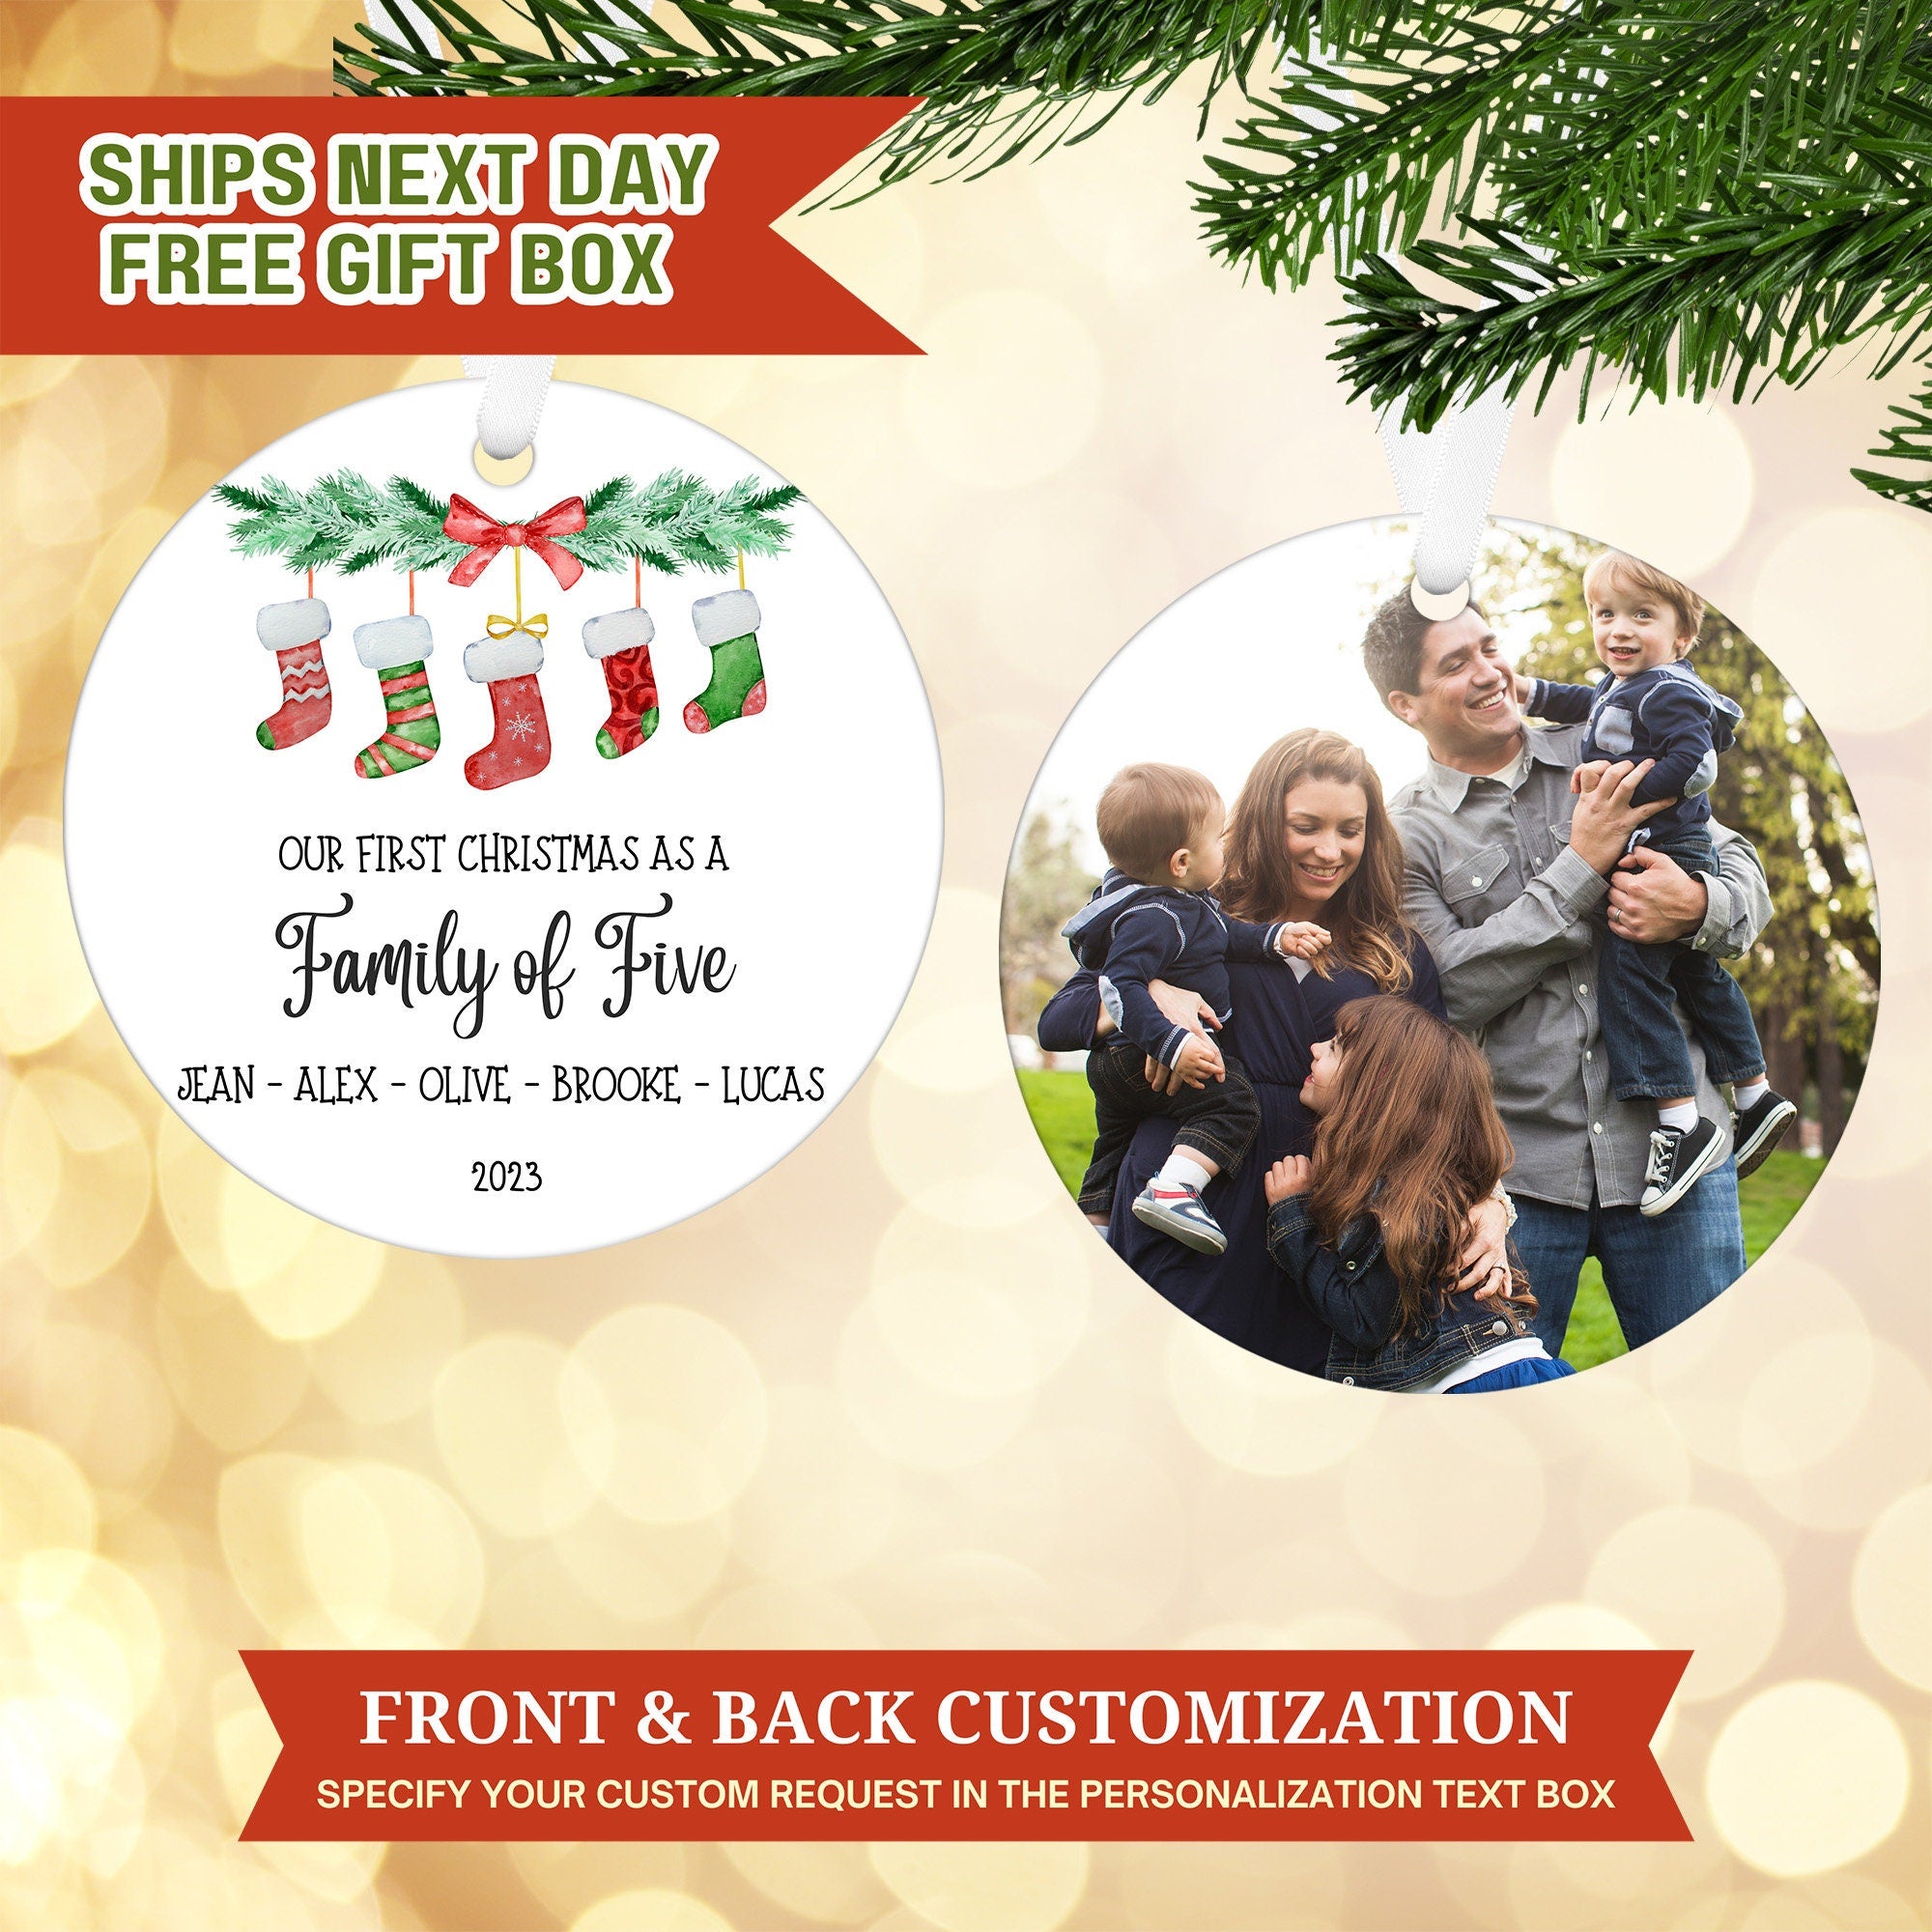 Custom Family of Three, Christmas Ornament, Custom Family Portrait Ornament, Personalized Family Photo Ornament, Custom Christmas Ornament